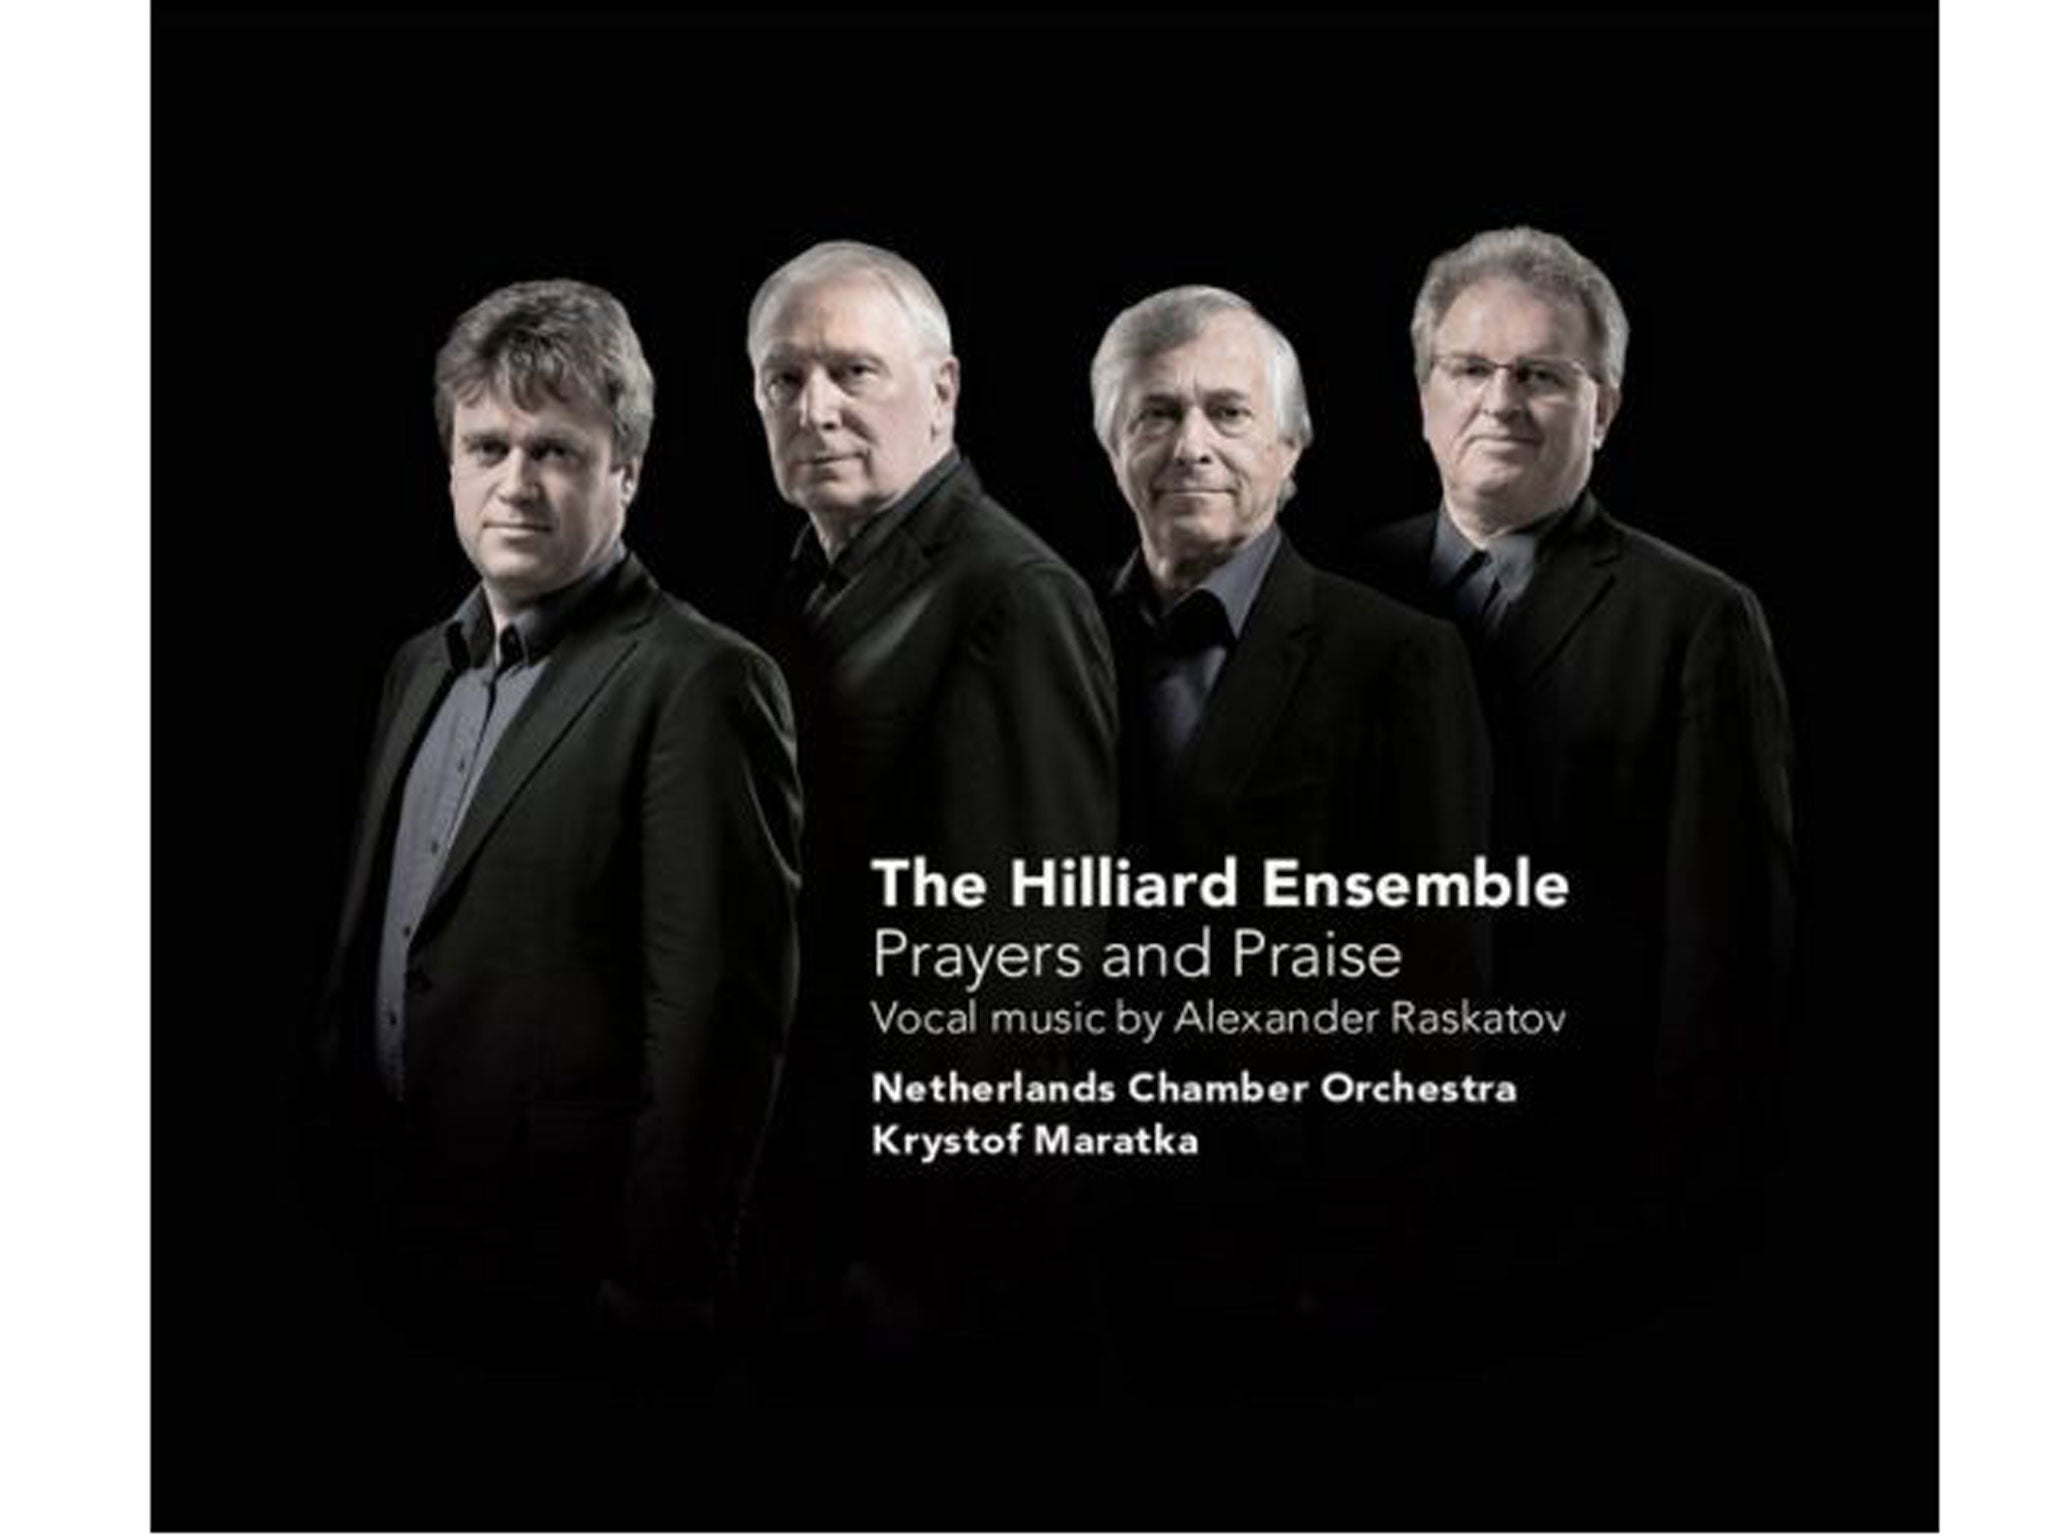 The Hilliard Ensemble, Prayers and Praise: Vocal Music by Alexander Raskatov (Challenge Classics)